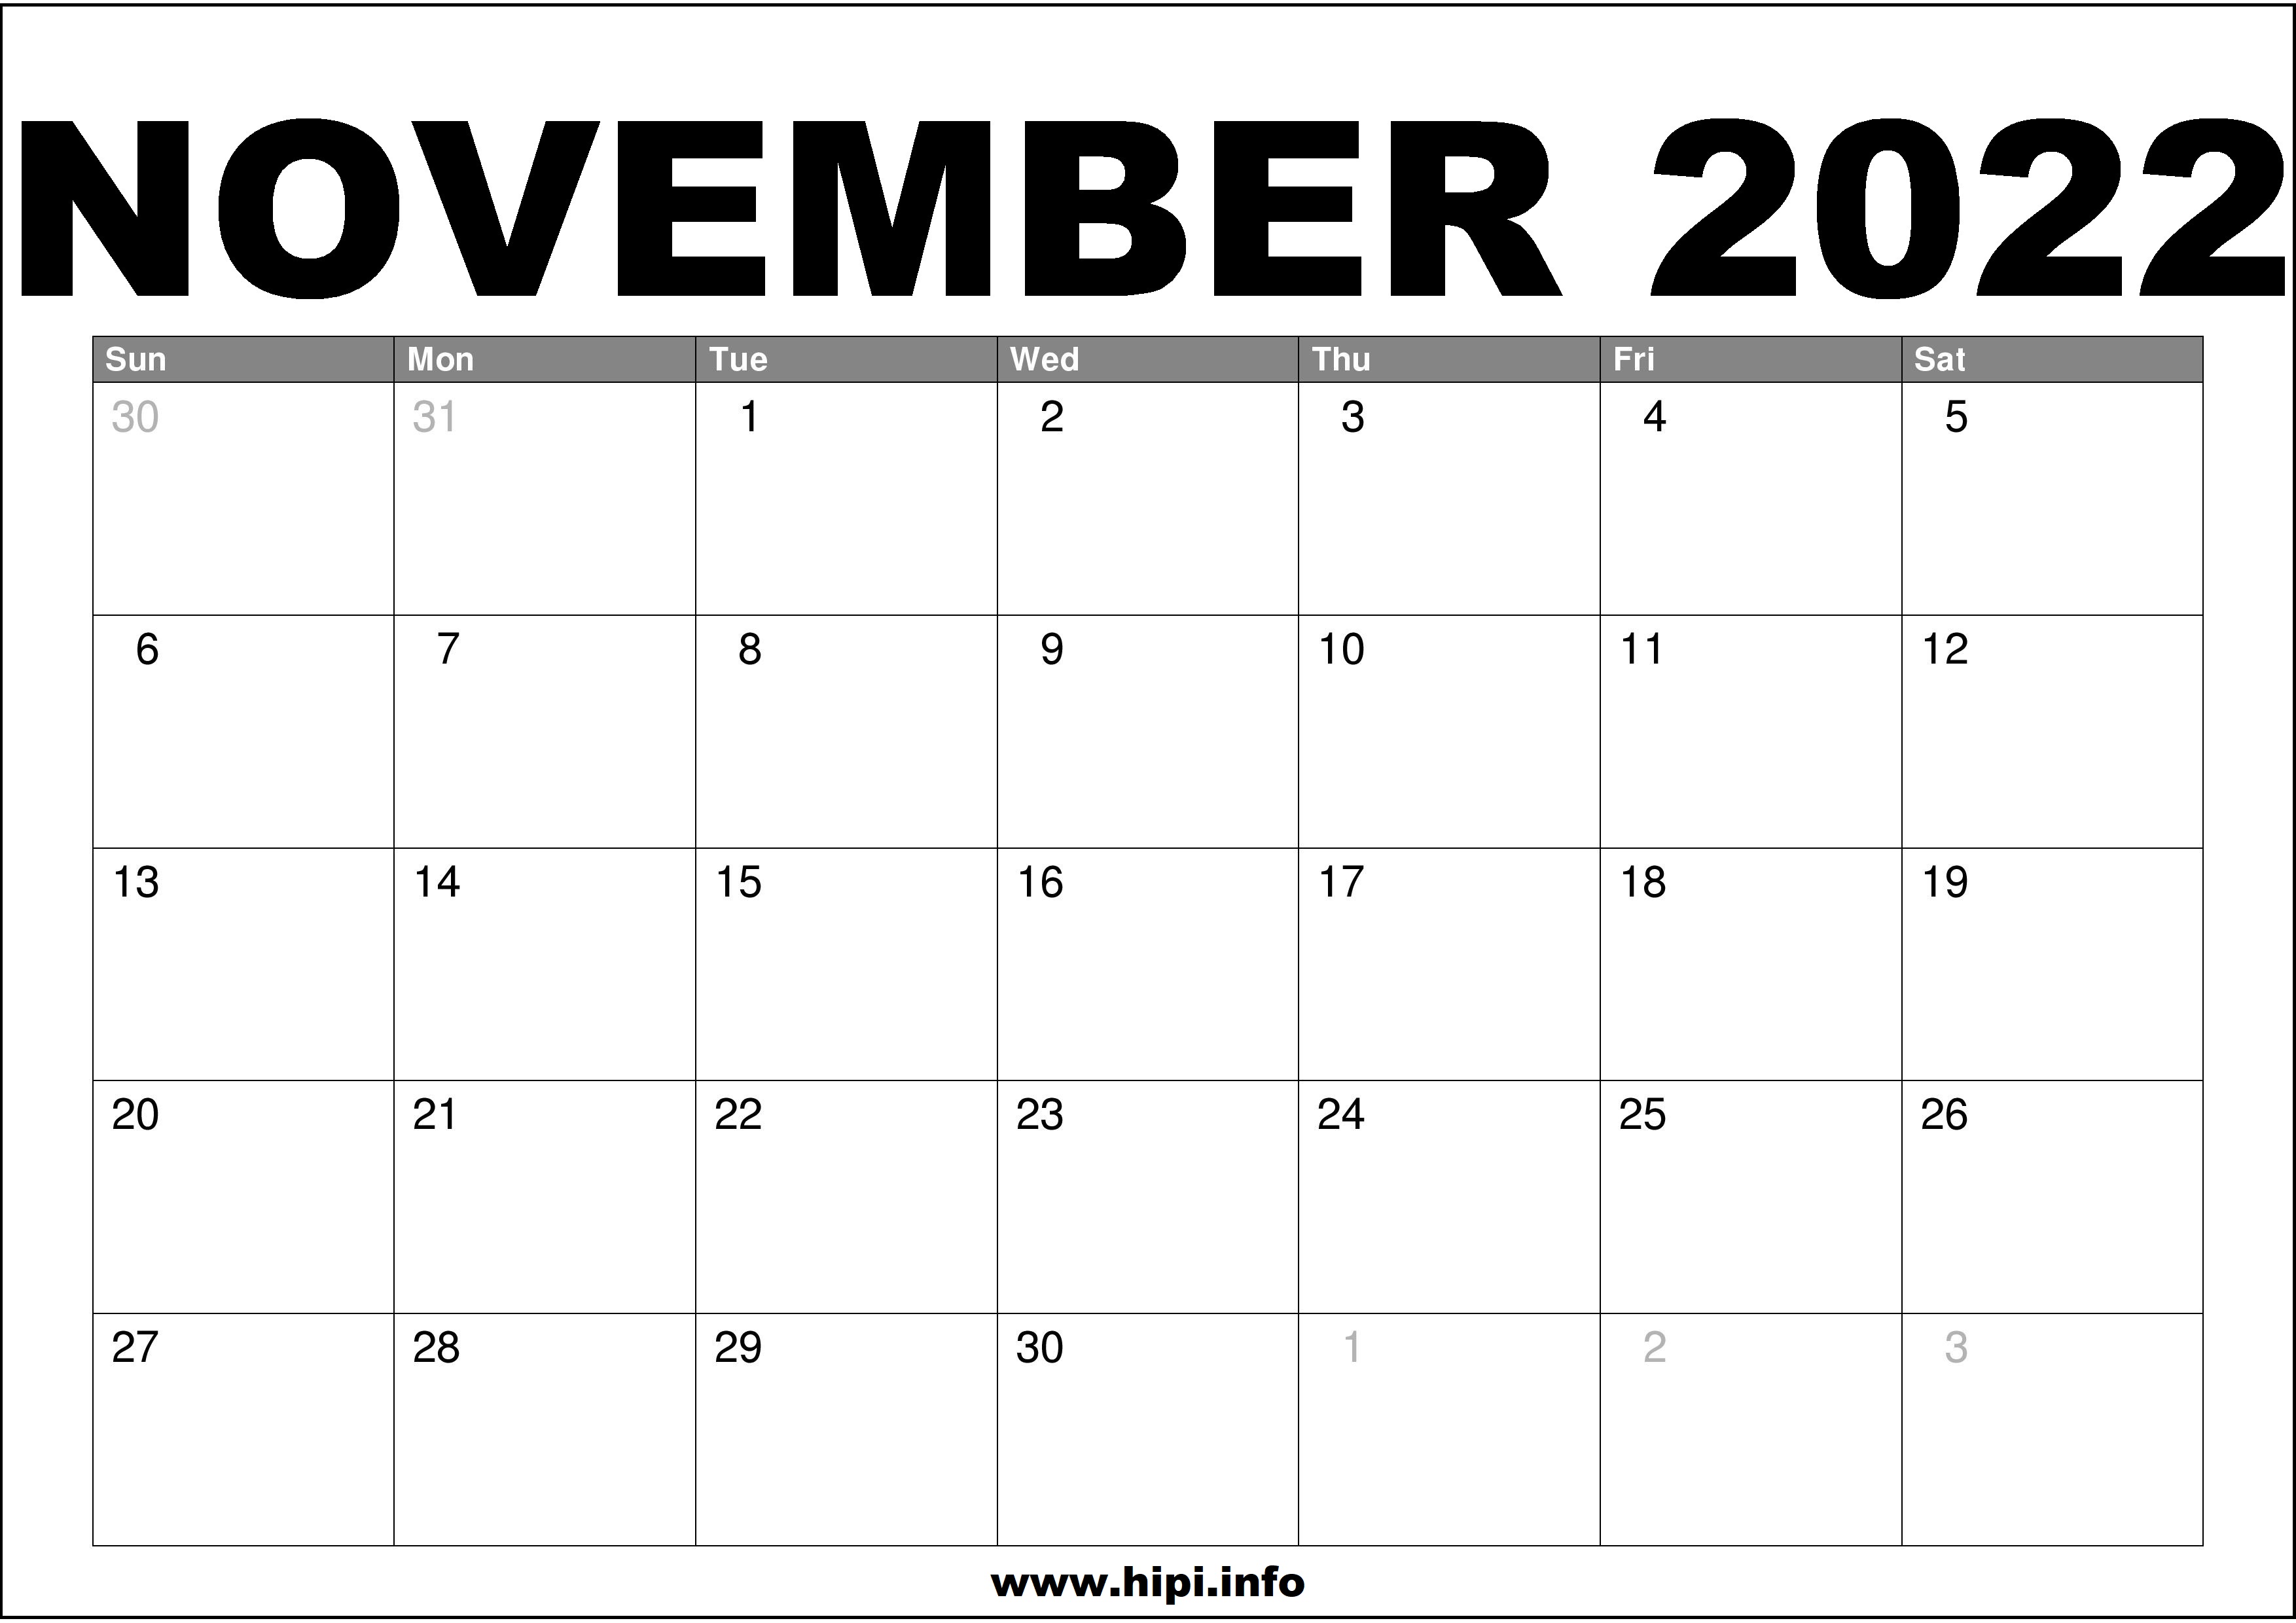 November 2022 Monthly Calendar November 2022 Calendar Printable Free - Hipi.info | Calendars Printable Free